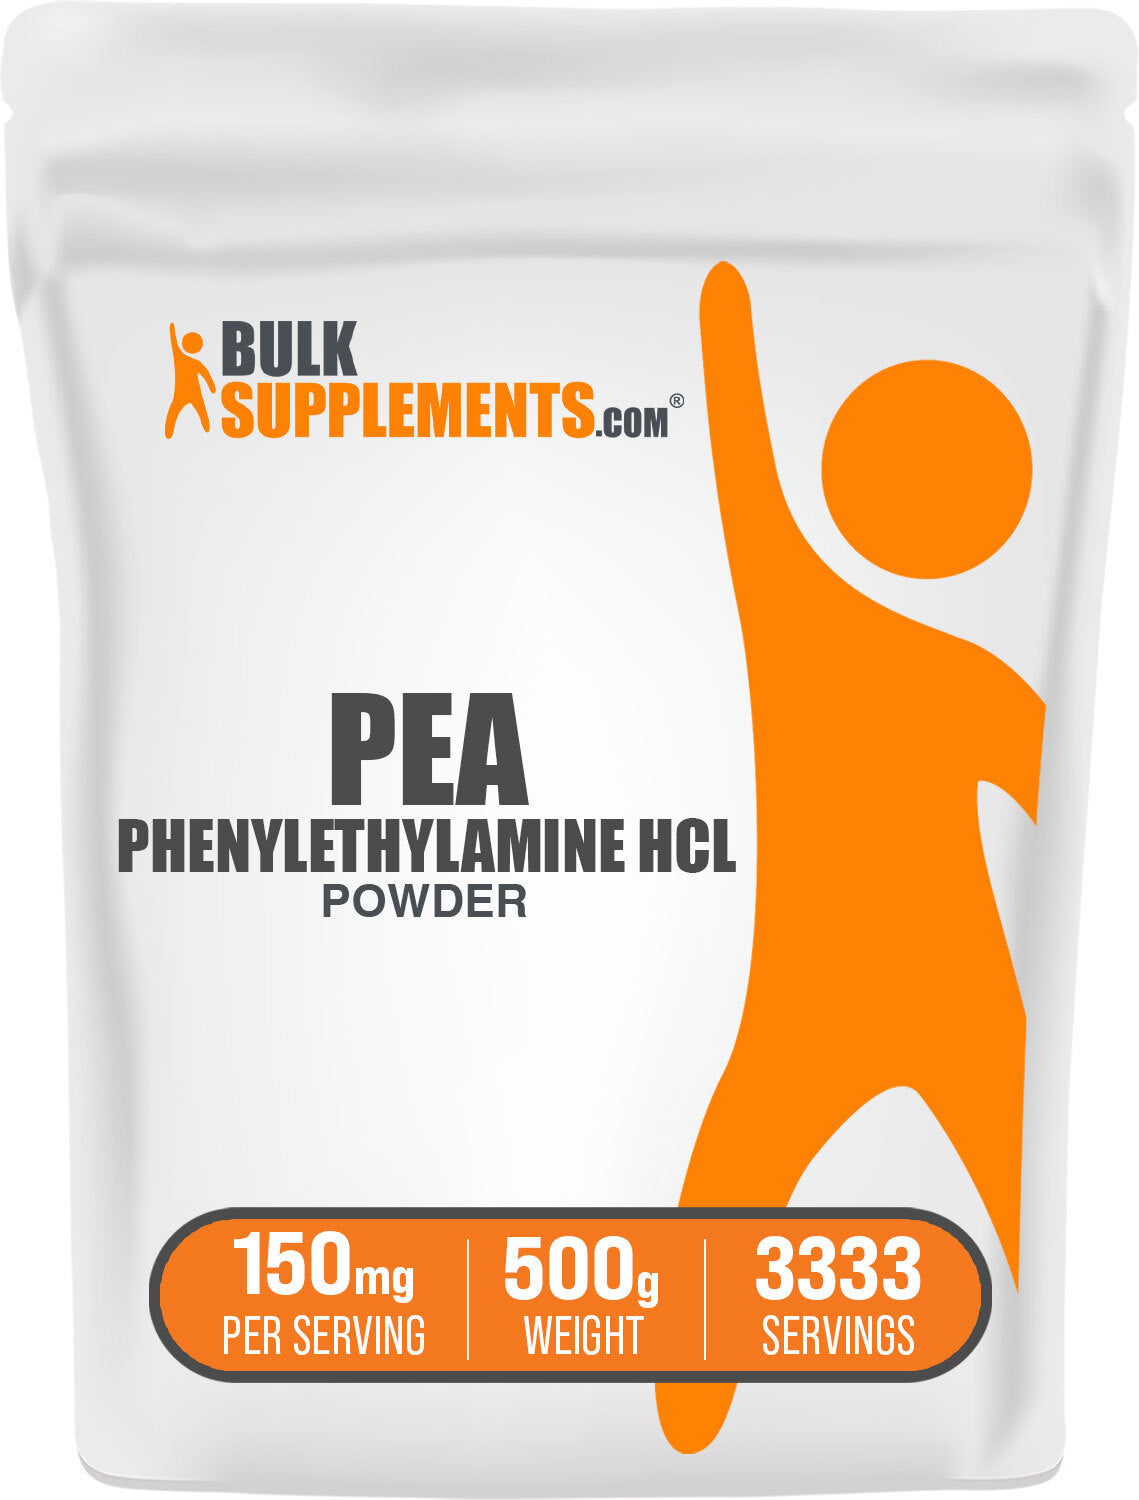 Phenylethylamine HCl (PEA) Powder 500g bag